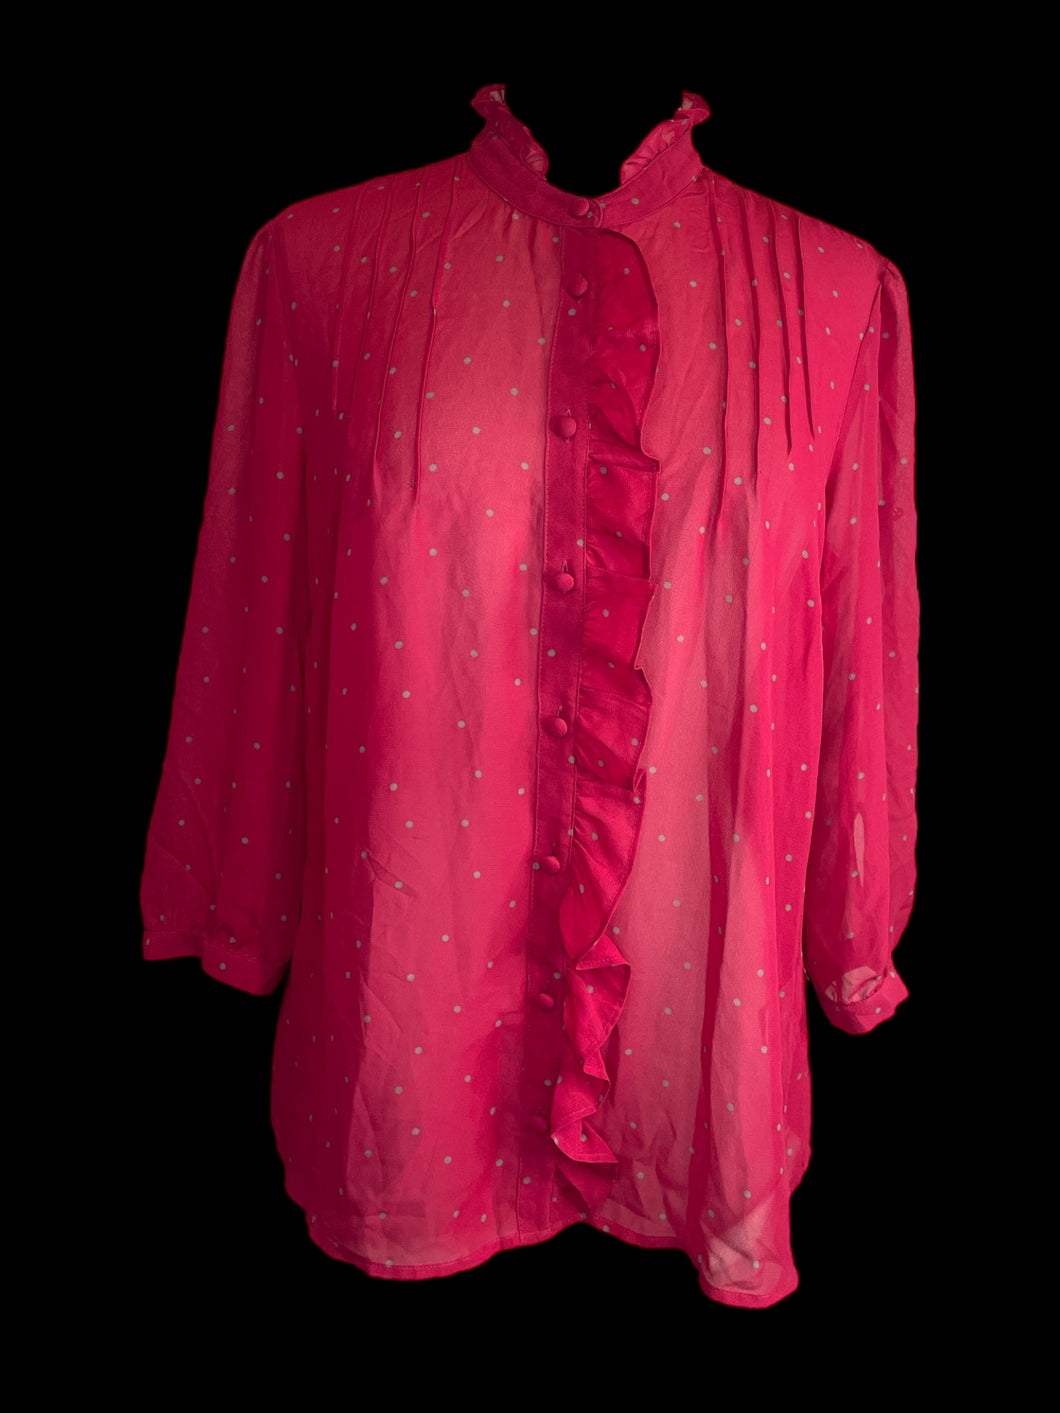 L Hot pink sheer button-up top w/ grey polka dot pattern, ruffle hem detail, pleated bust, & button cuffs